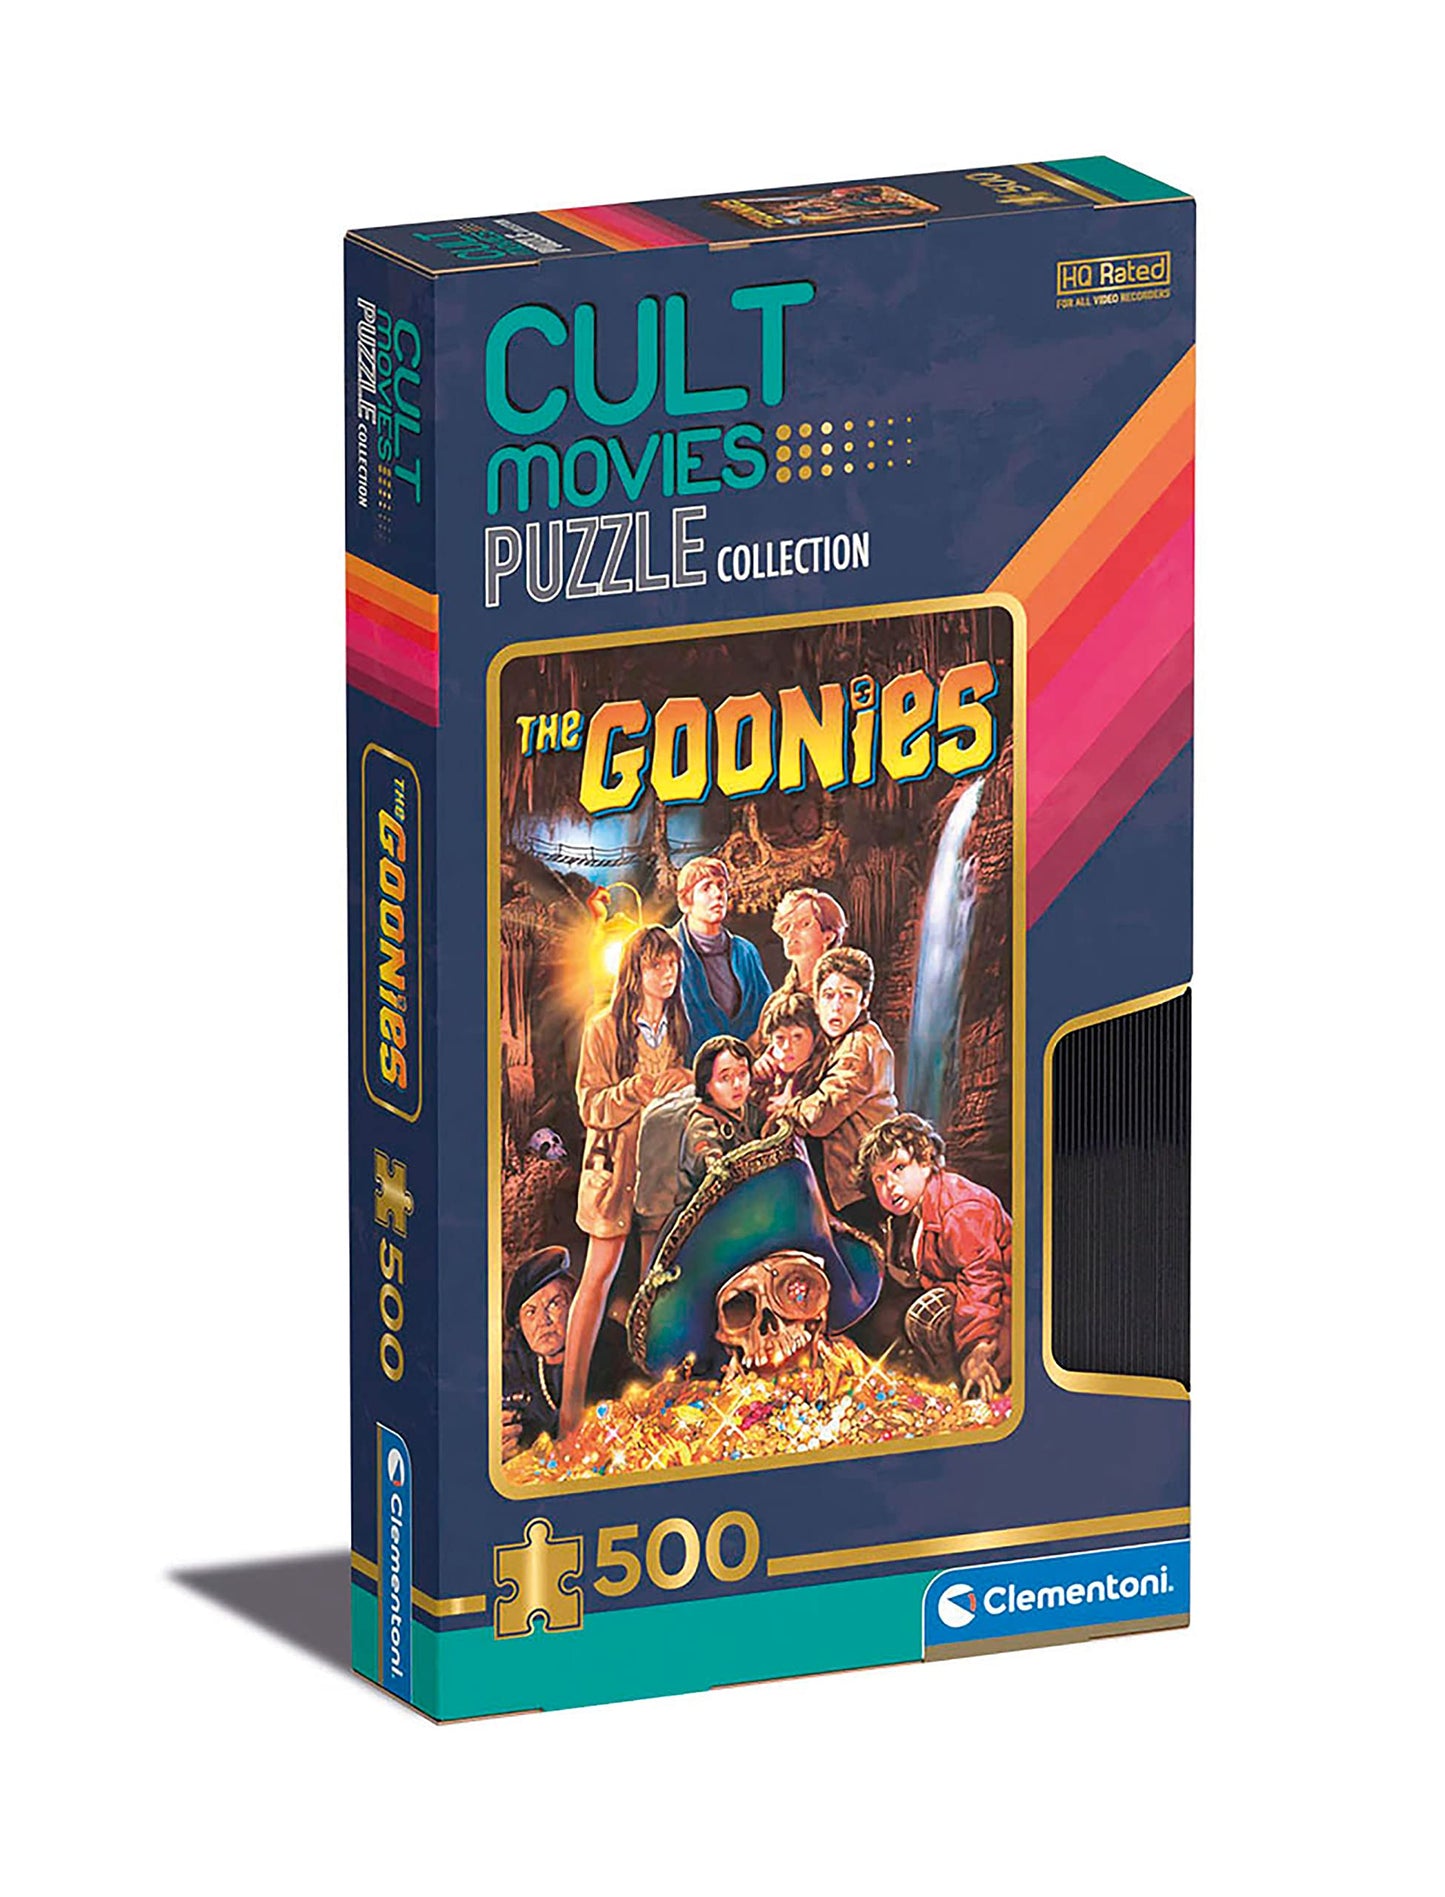 Cultfilms - The Goonies, puzzel van 500 stukjes